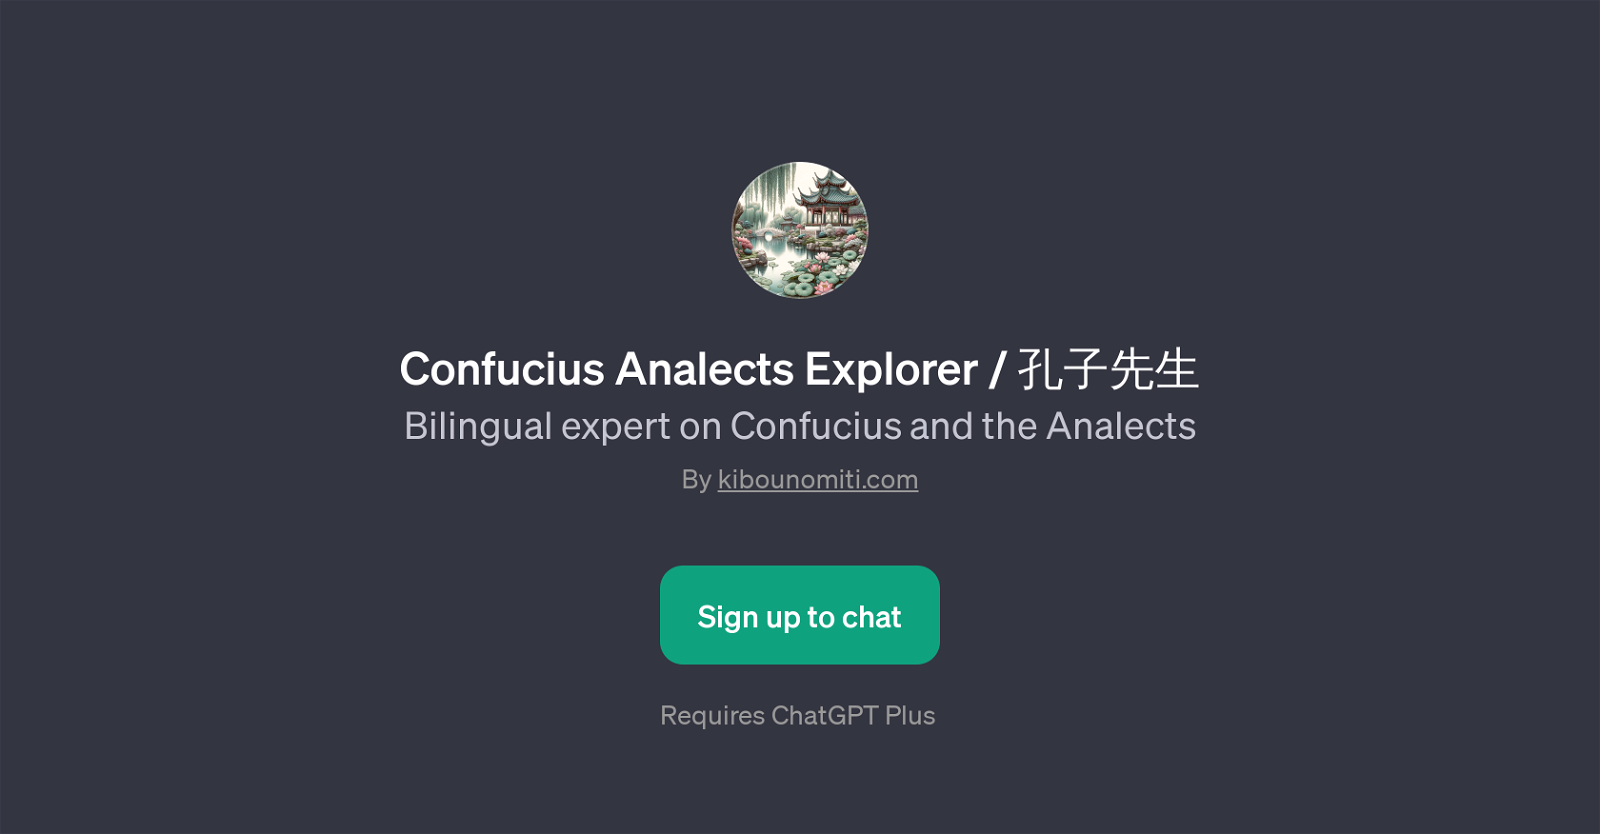 Confucius Analects Explorer / website